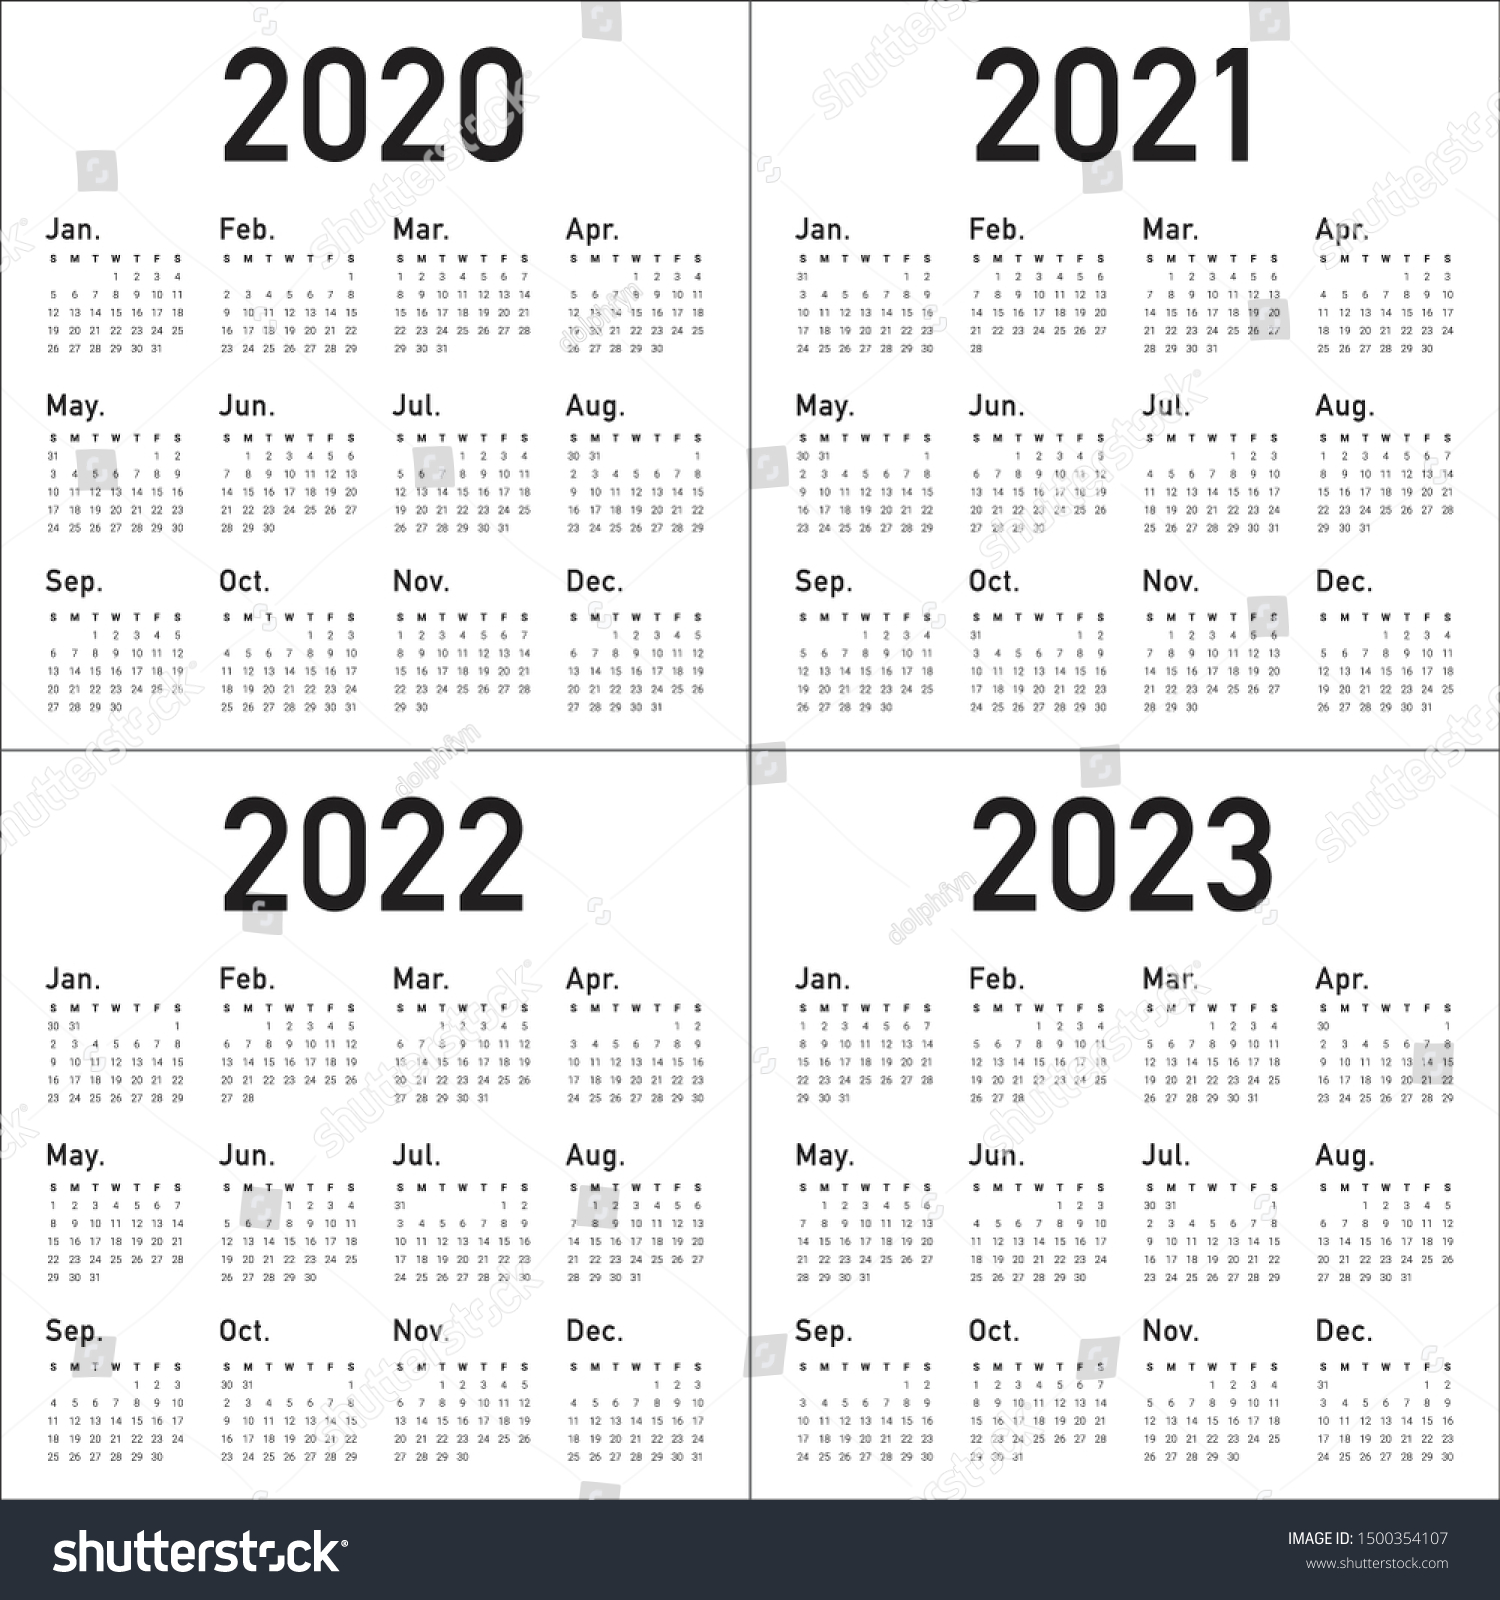 Uconn 2022 2023 Calendar Year 2020 2021 2022 2023 Calendar Stock Vector (Royalty Free) 1500354107